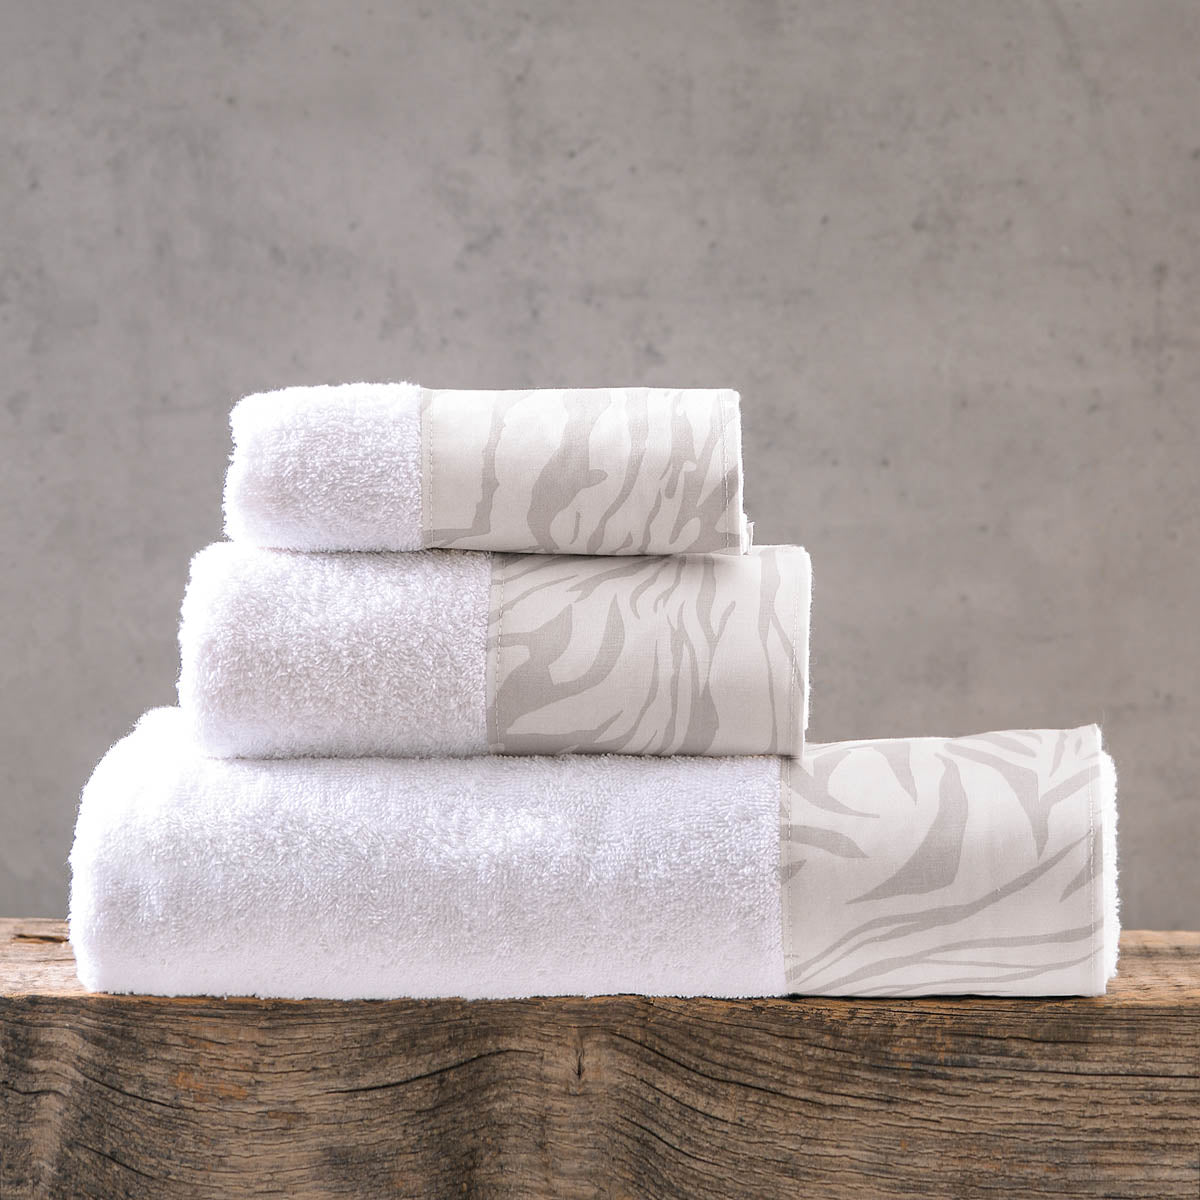 AUSTIN Λευκό-Γκρι - Σετ πετσέτες 3 τεμ. Λευκό - γκρι 30 x 50, 50 x 90, 80 x 150 από την εταιρεία Rythmos Home